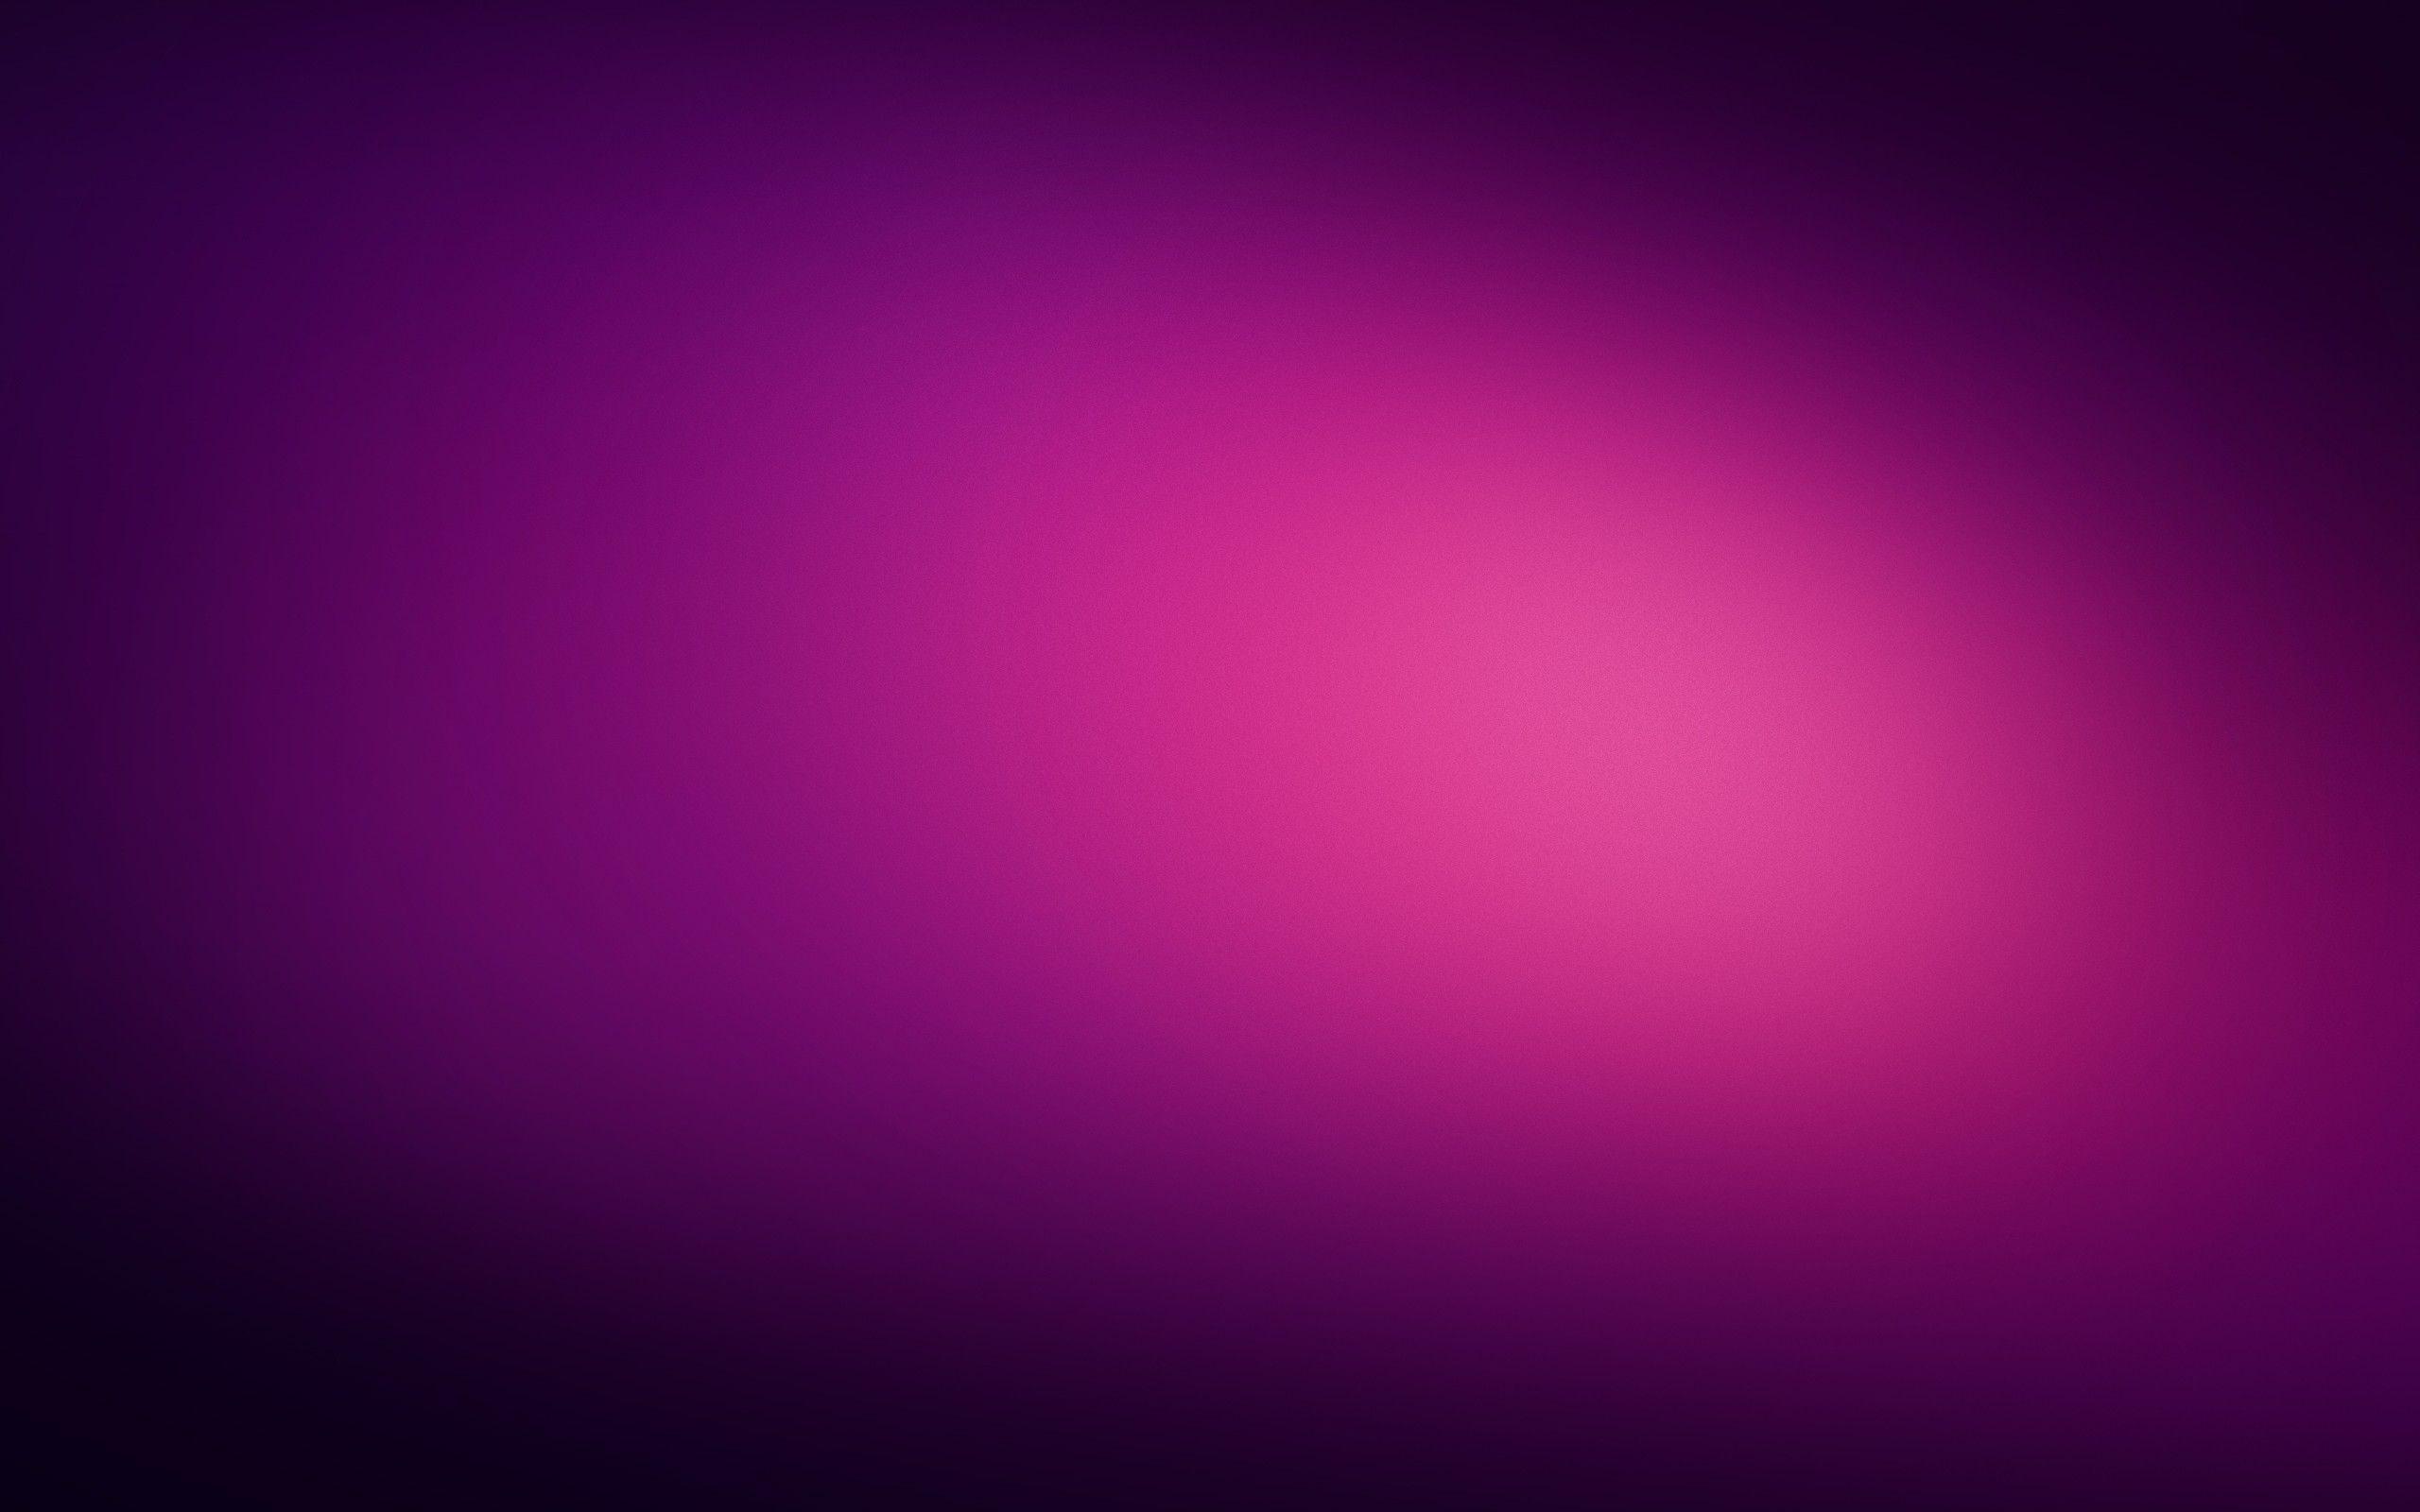 Download Free Purple Wallpaper 7627 2560x1600 px High Resolution